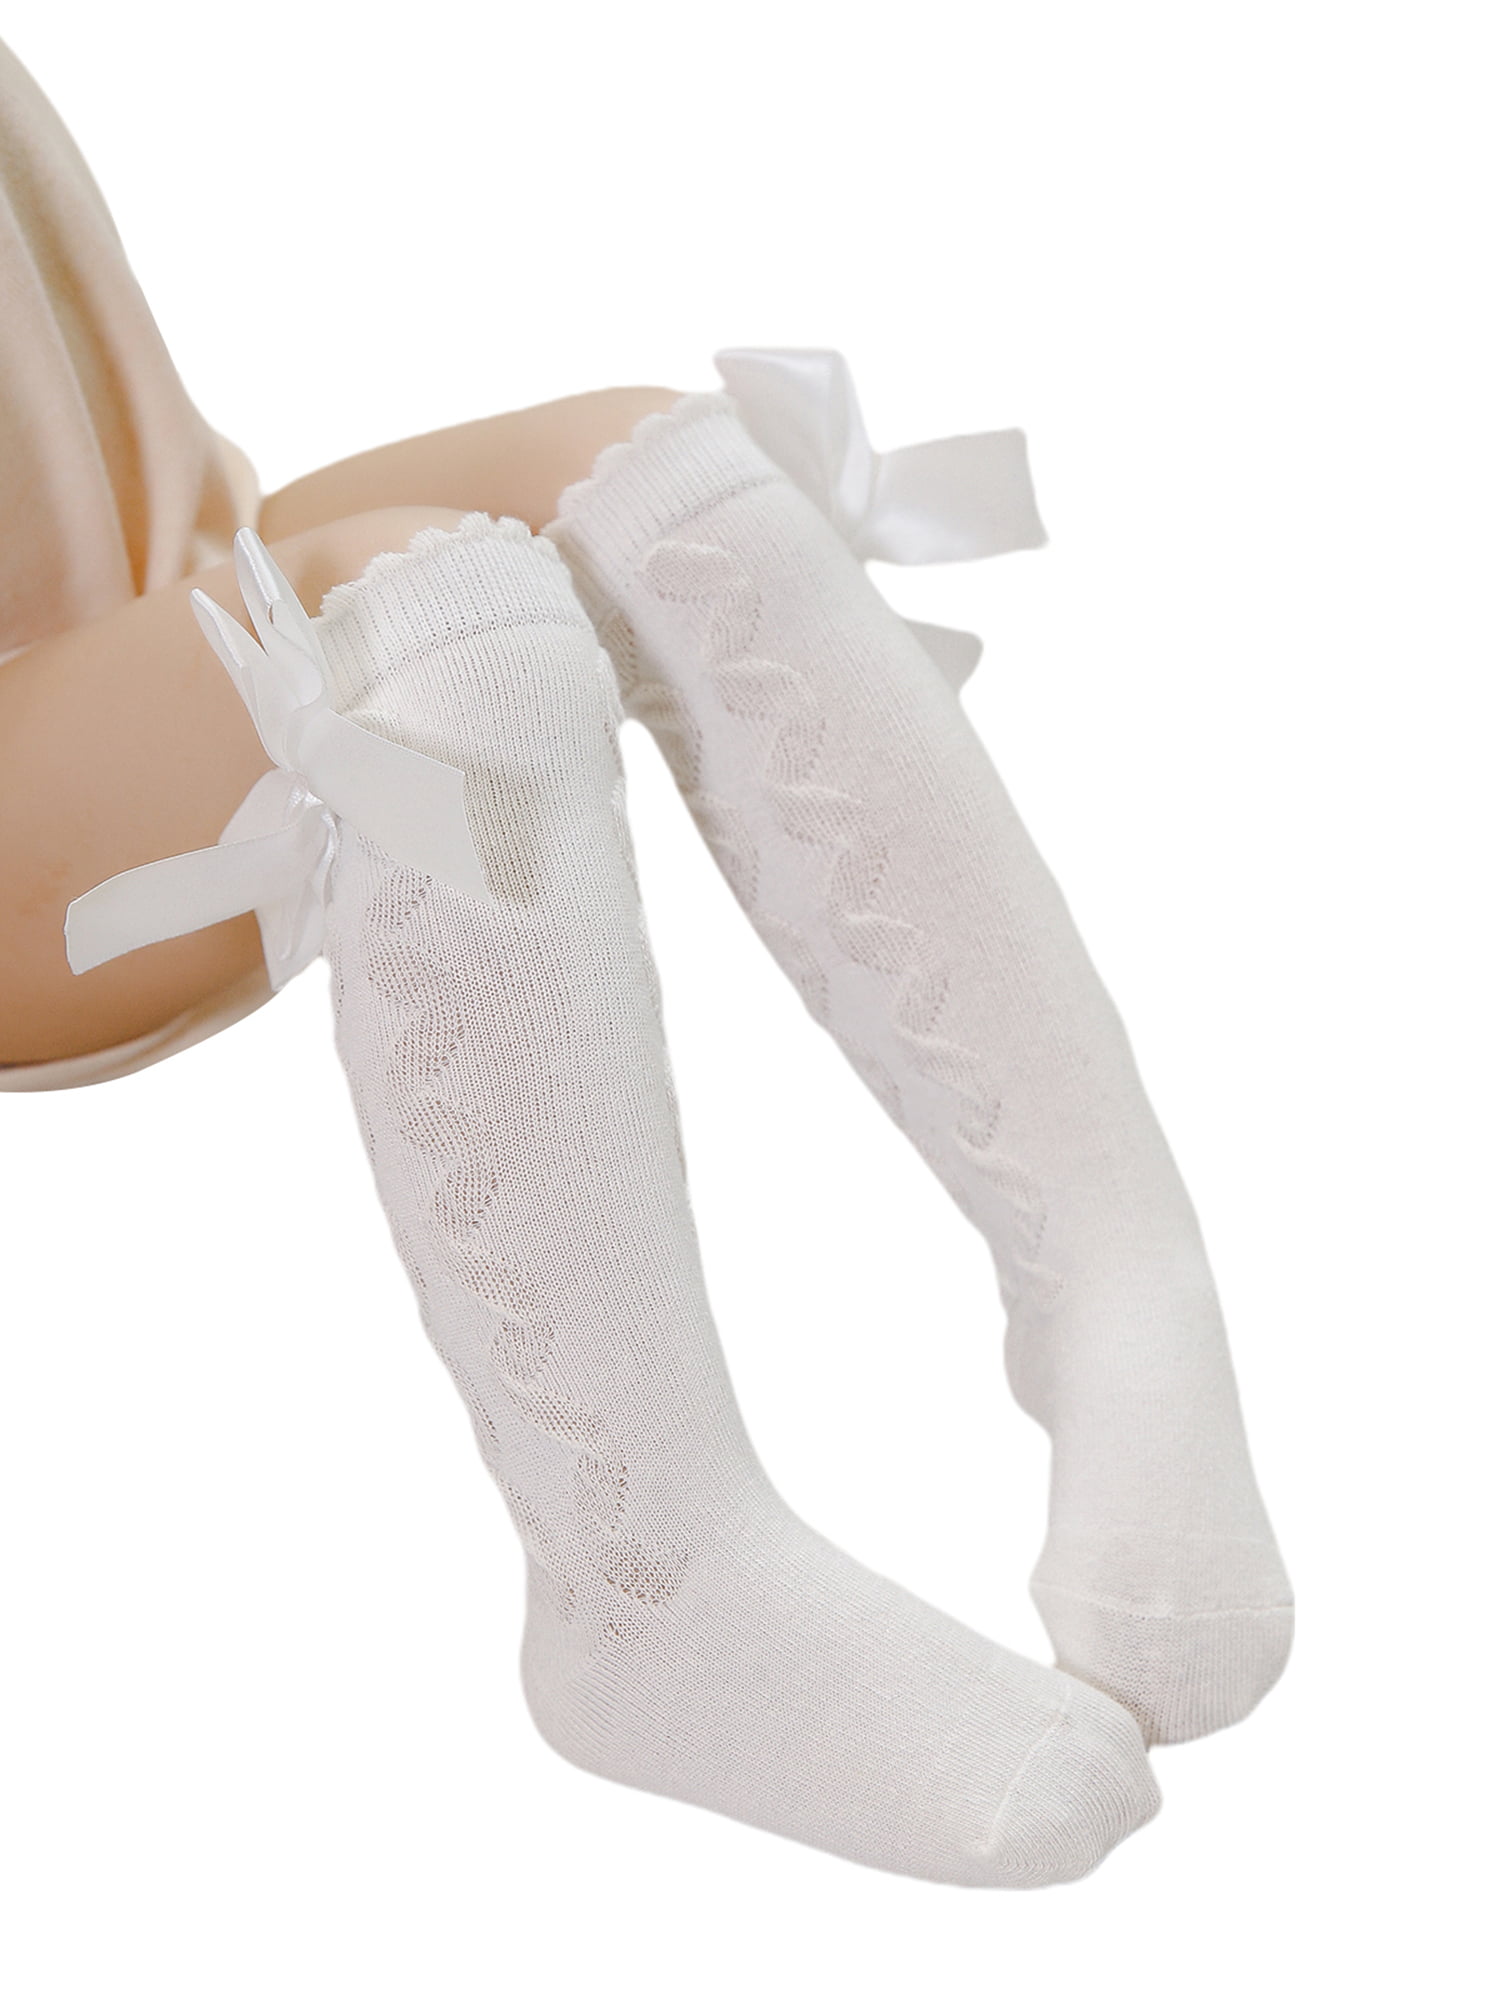 Toddler Baby Girls Knee High Long Socks Spanish Ribbon Bow Knit Cotton Stockings 